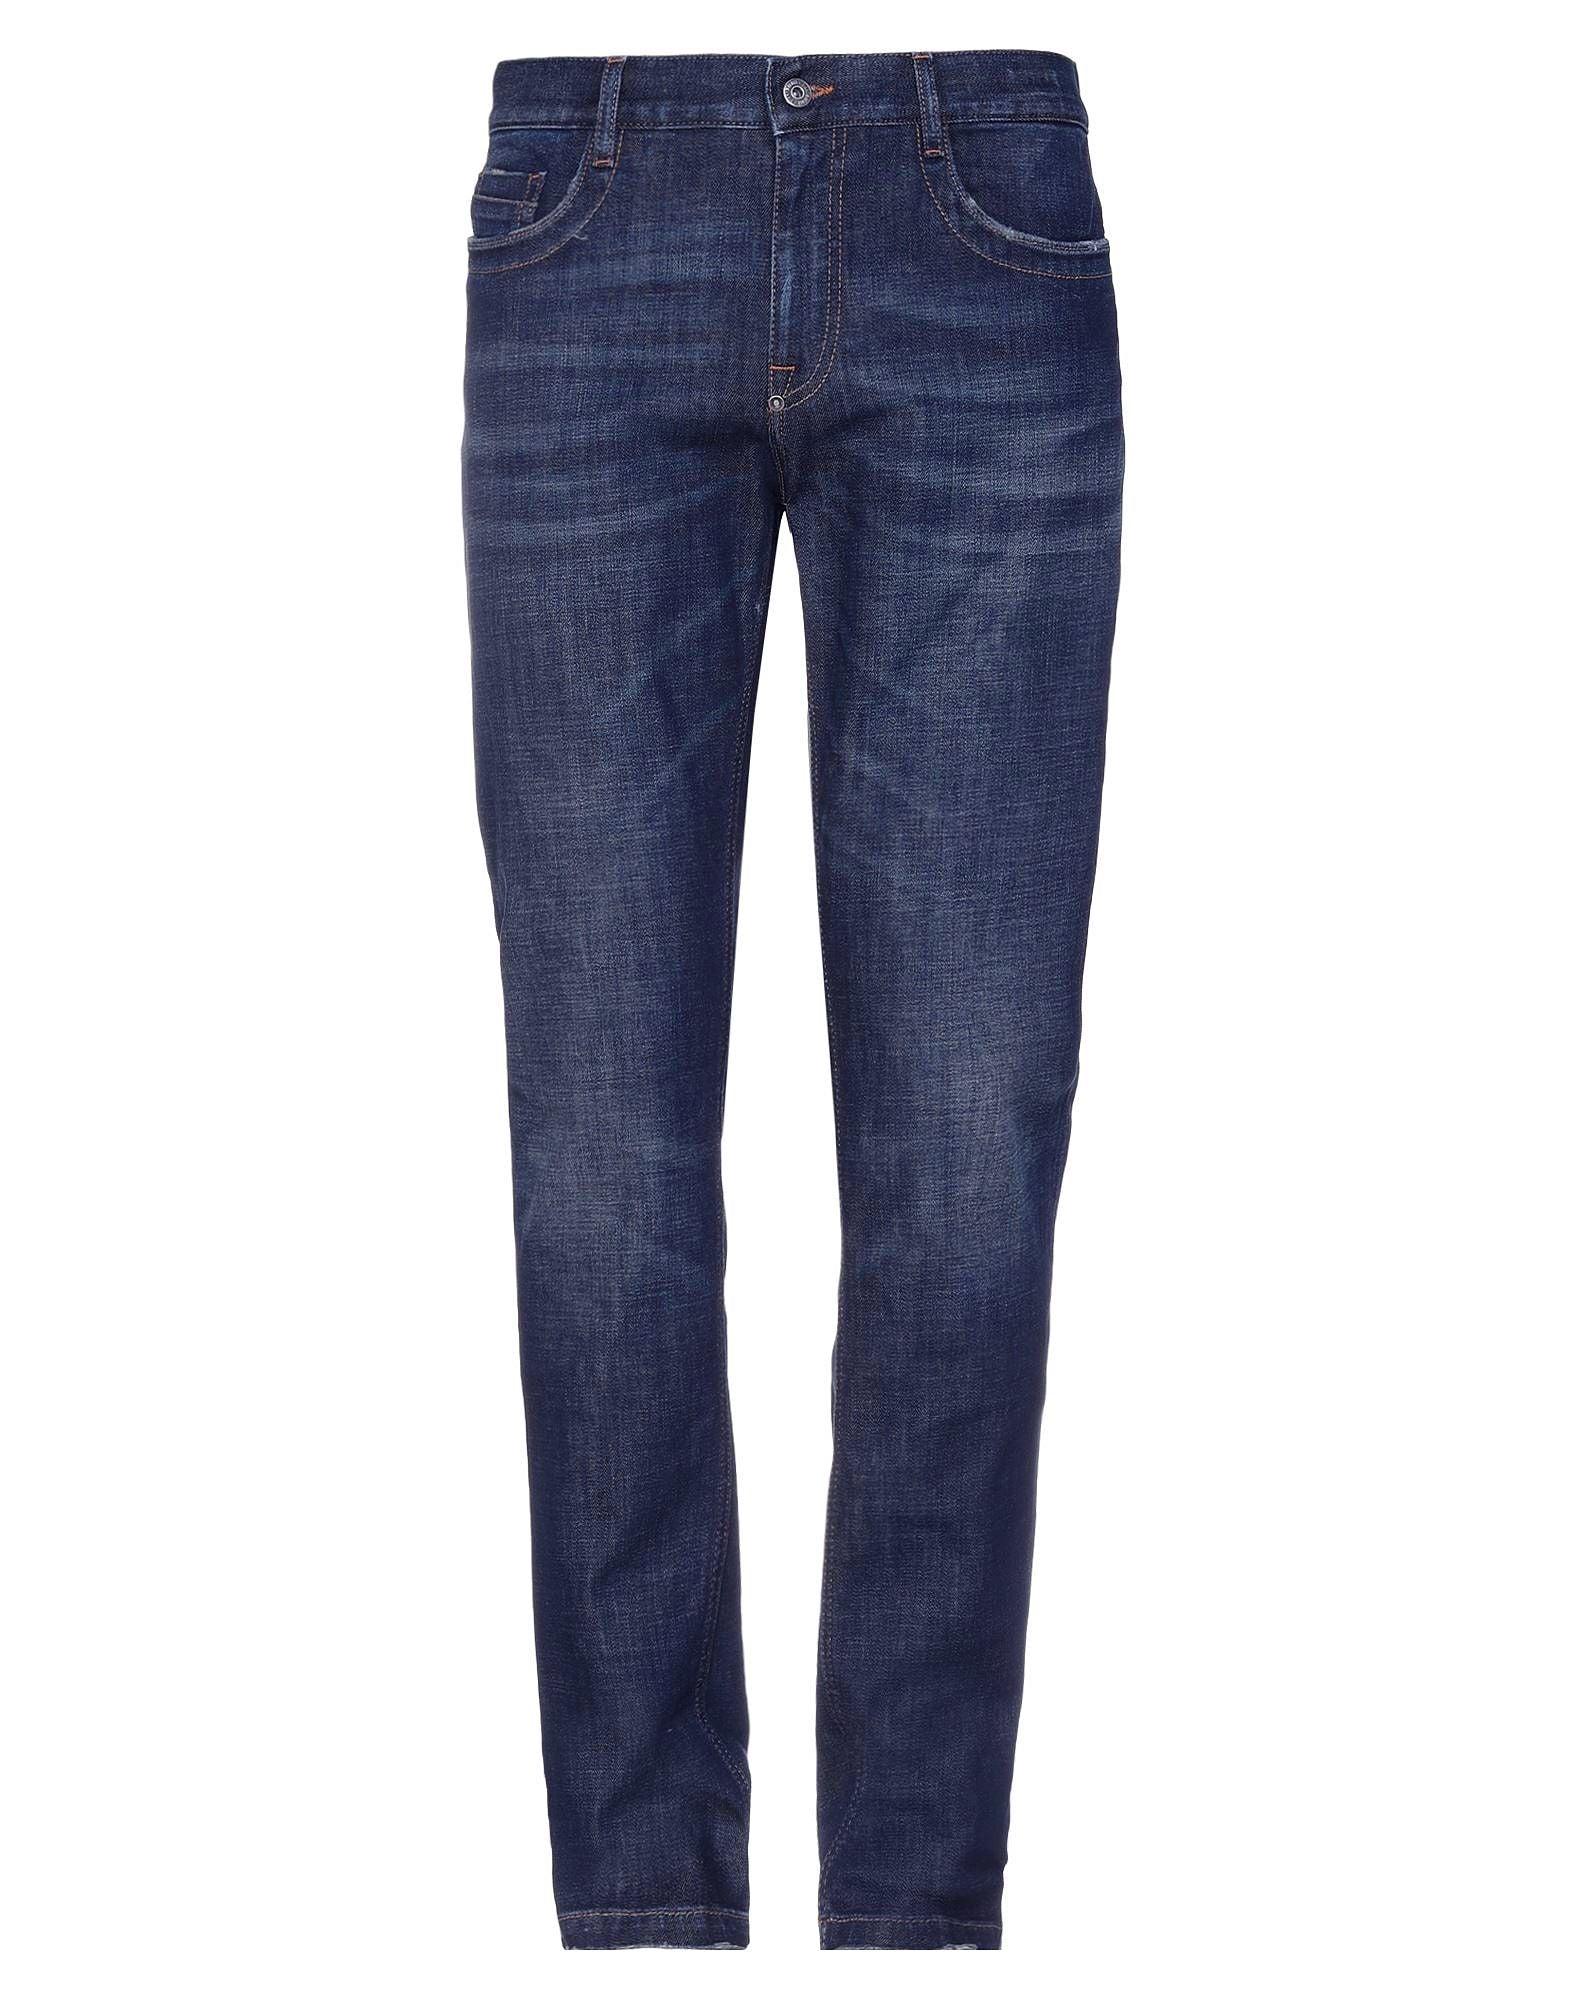 Bikkembergs Blue Cotton Jeans & Pant